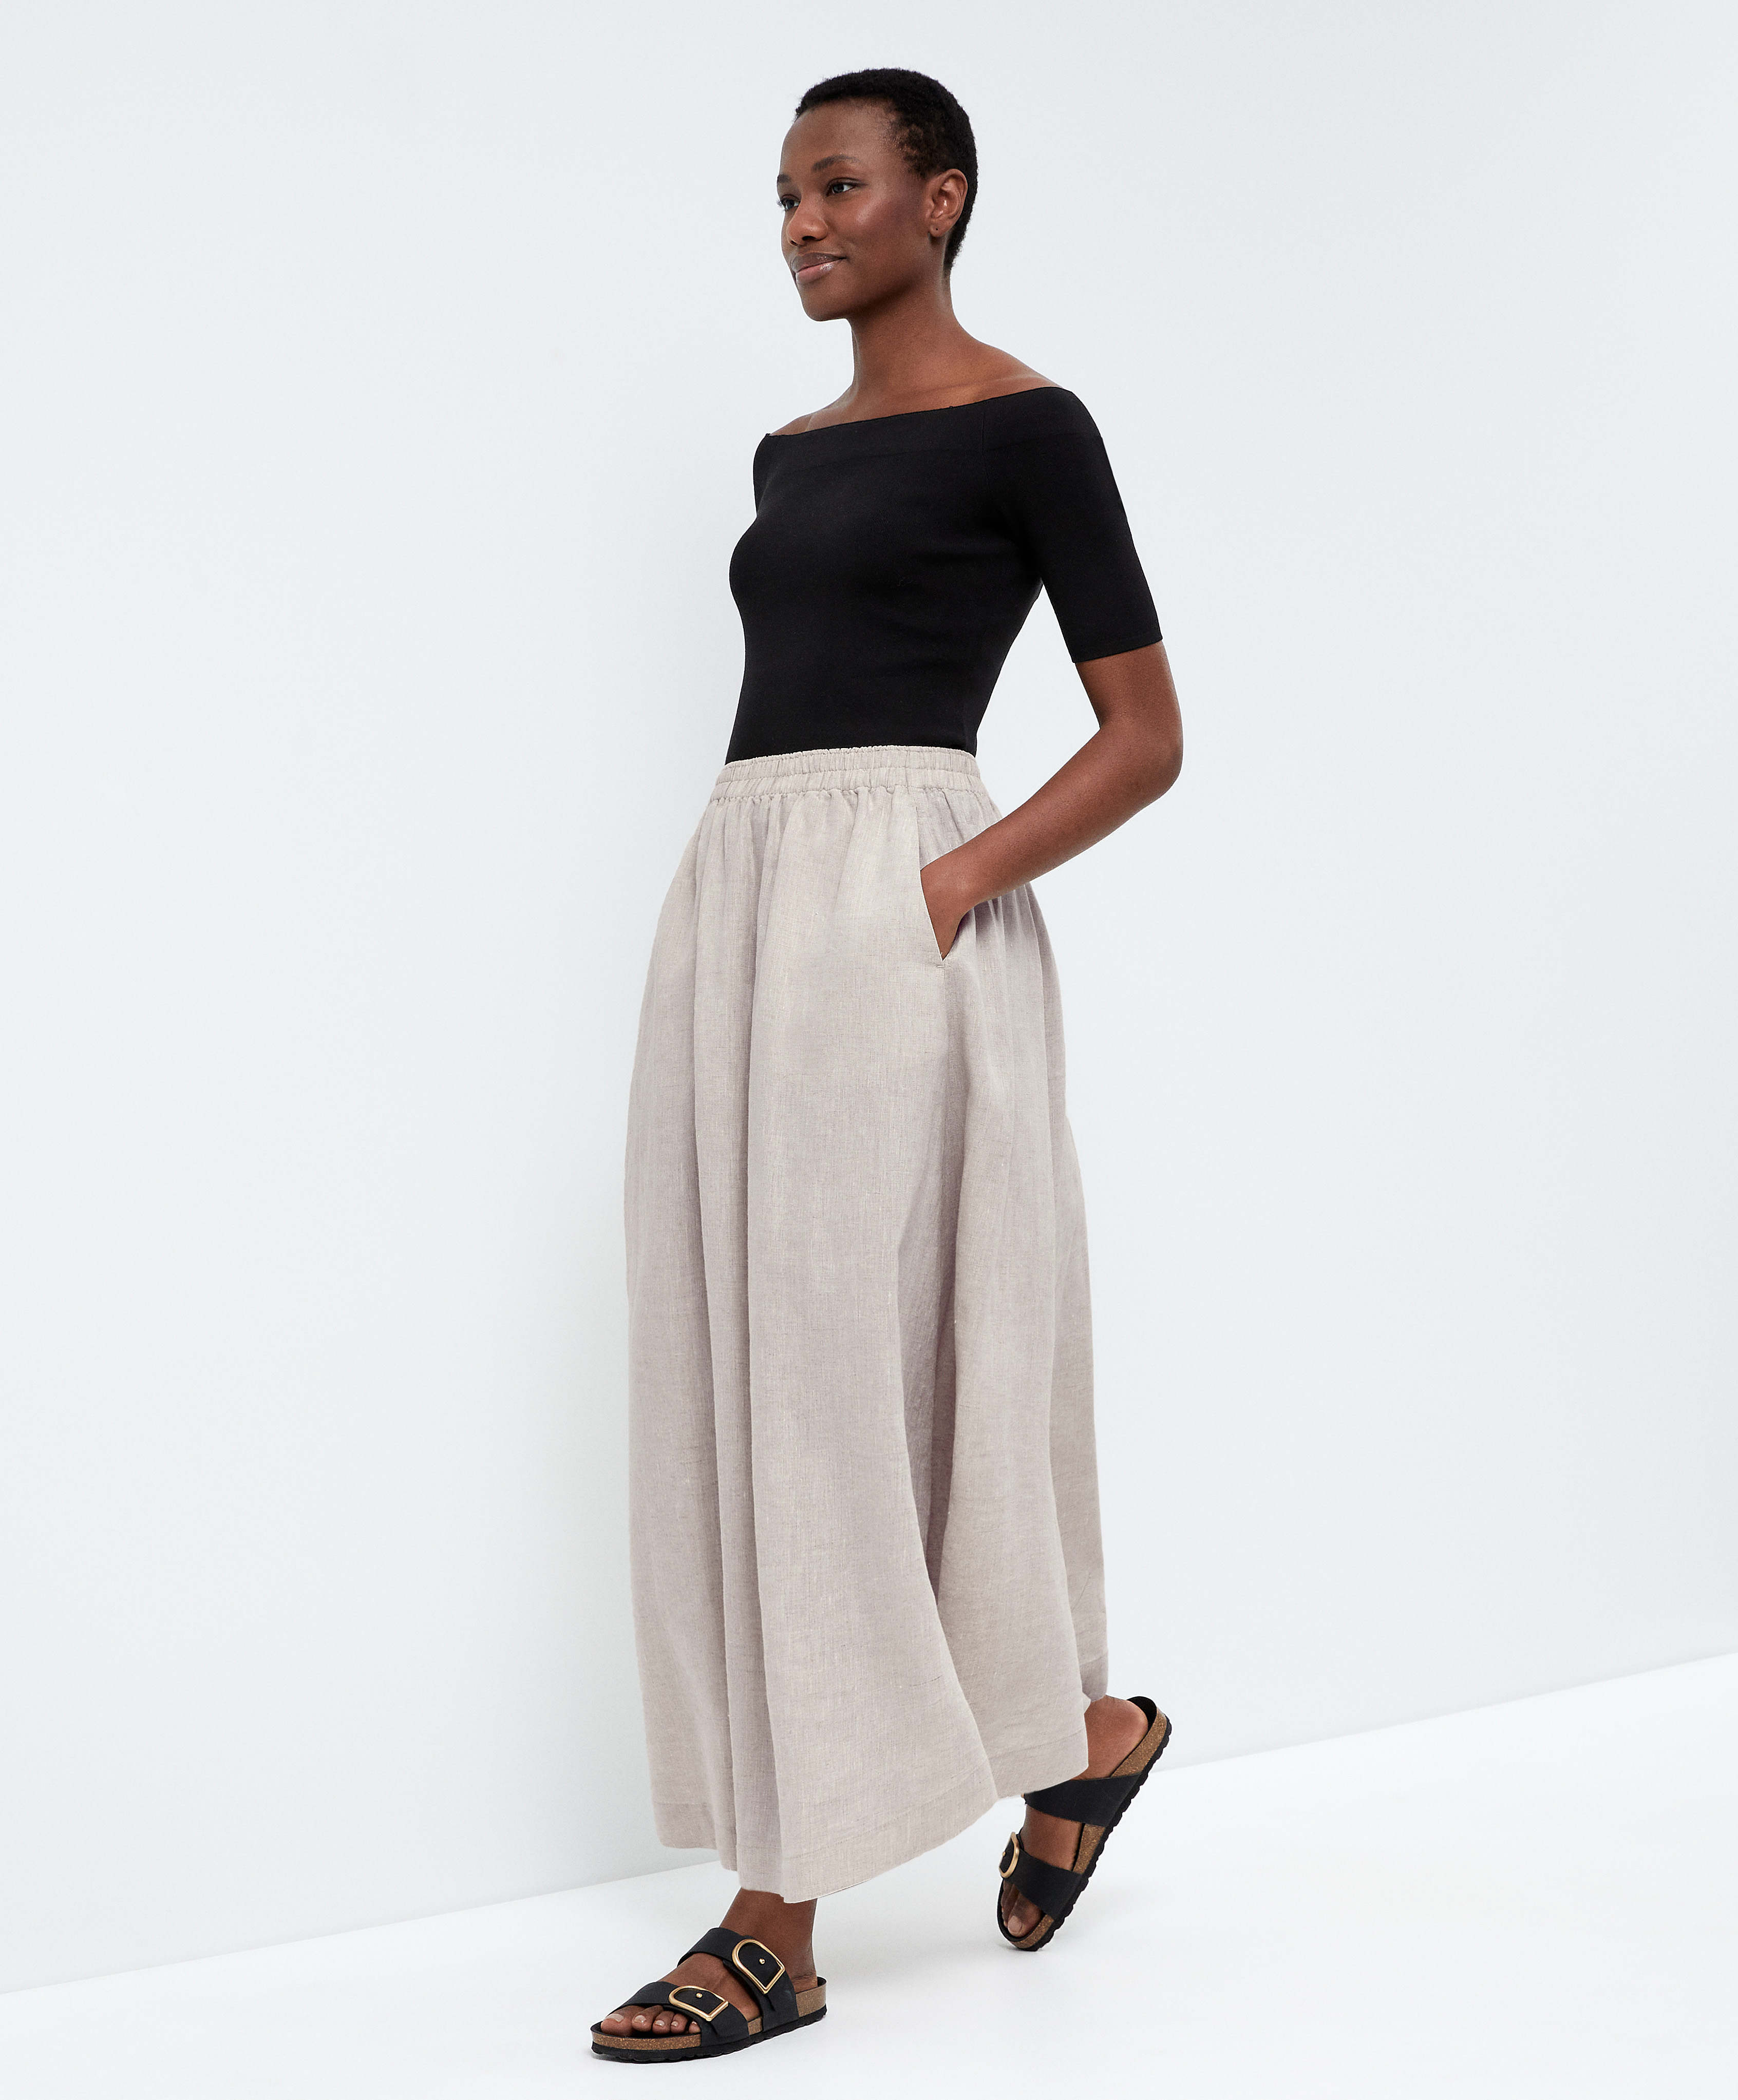 Wrap skirt, m, Oysho, 170/70 cm, with drawstring waist and hummingbird  pocket